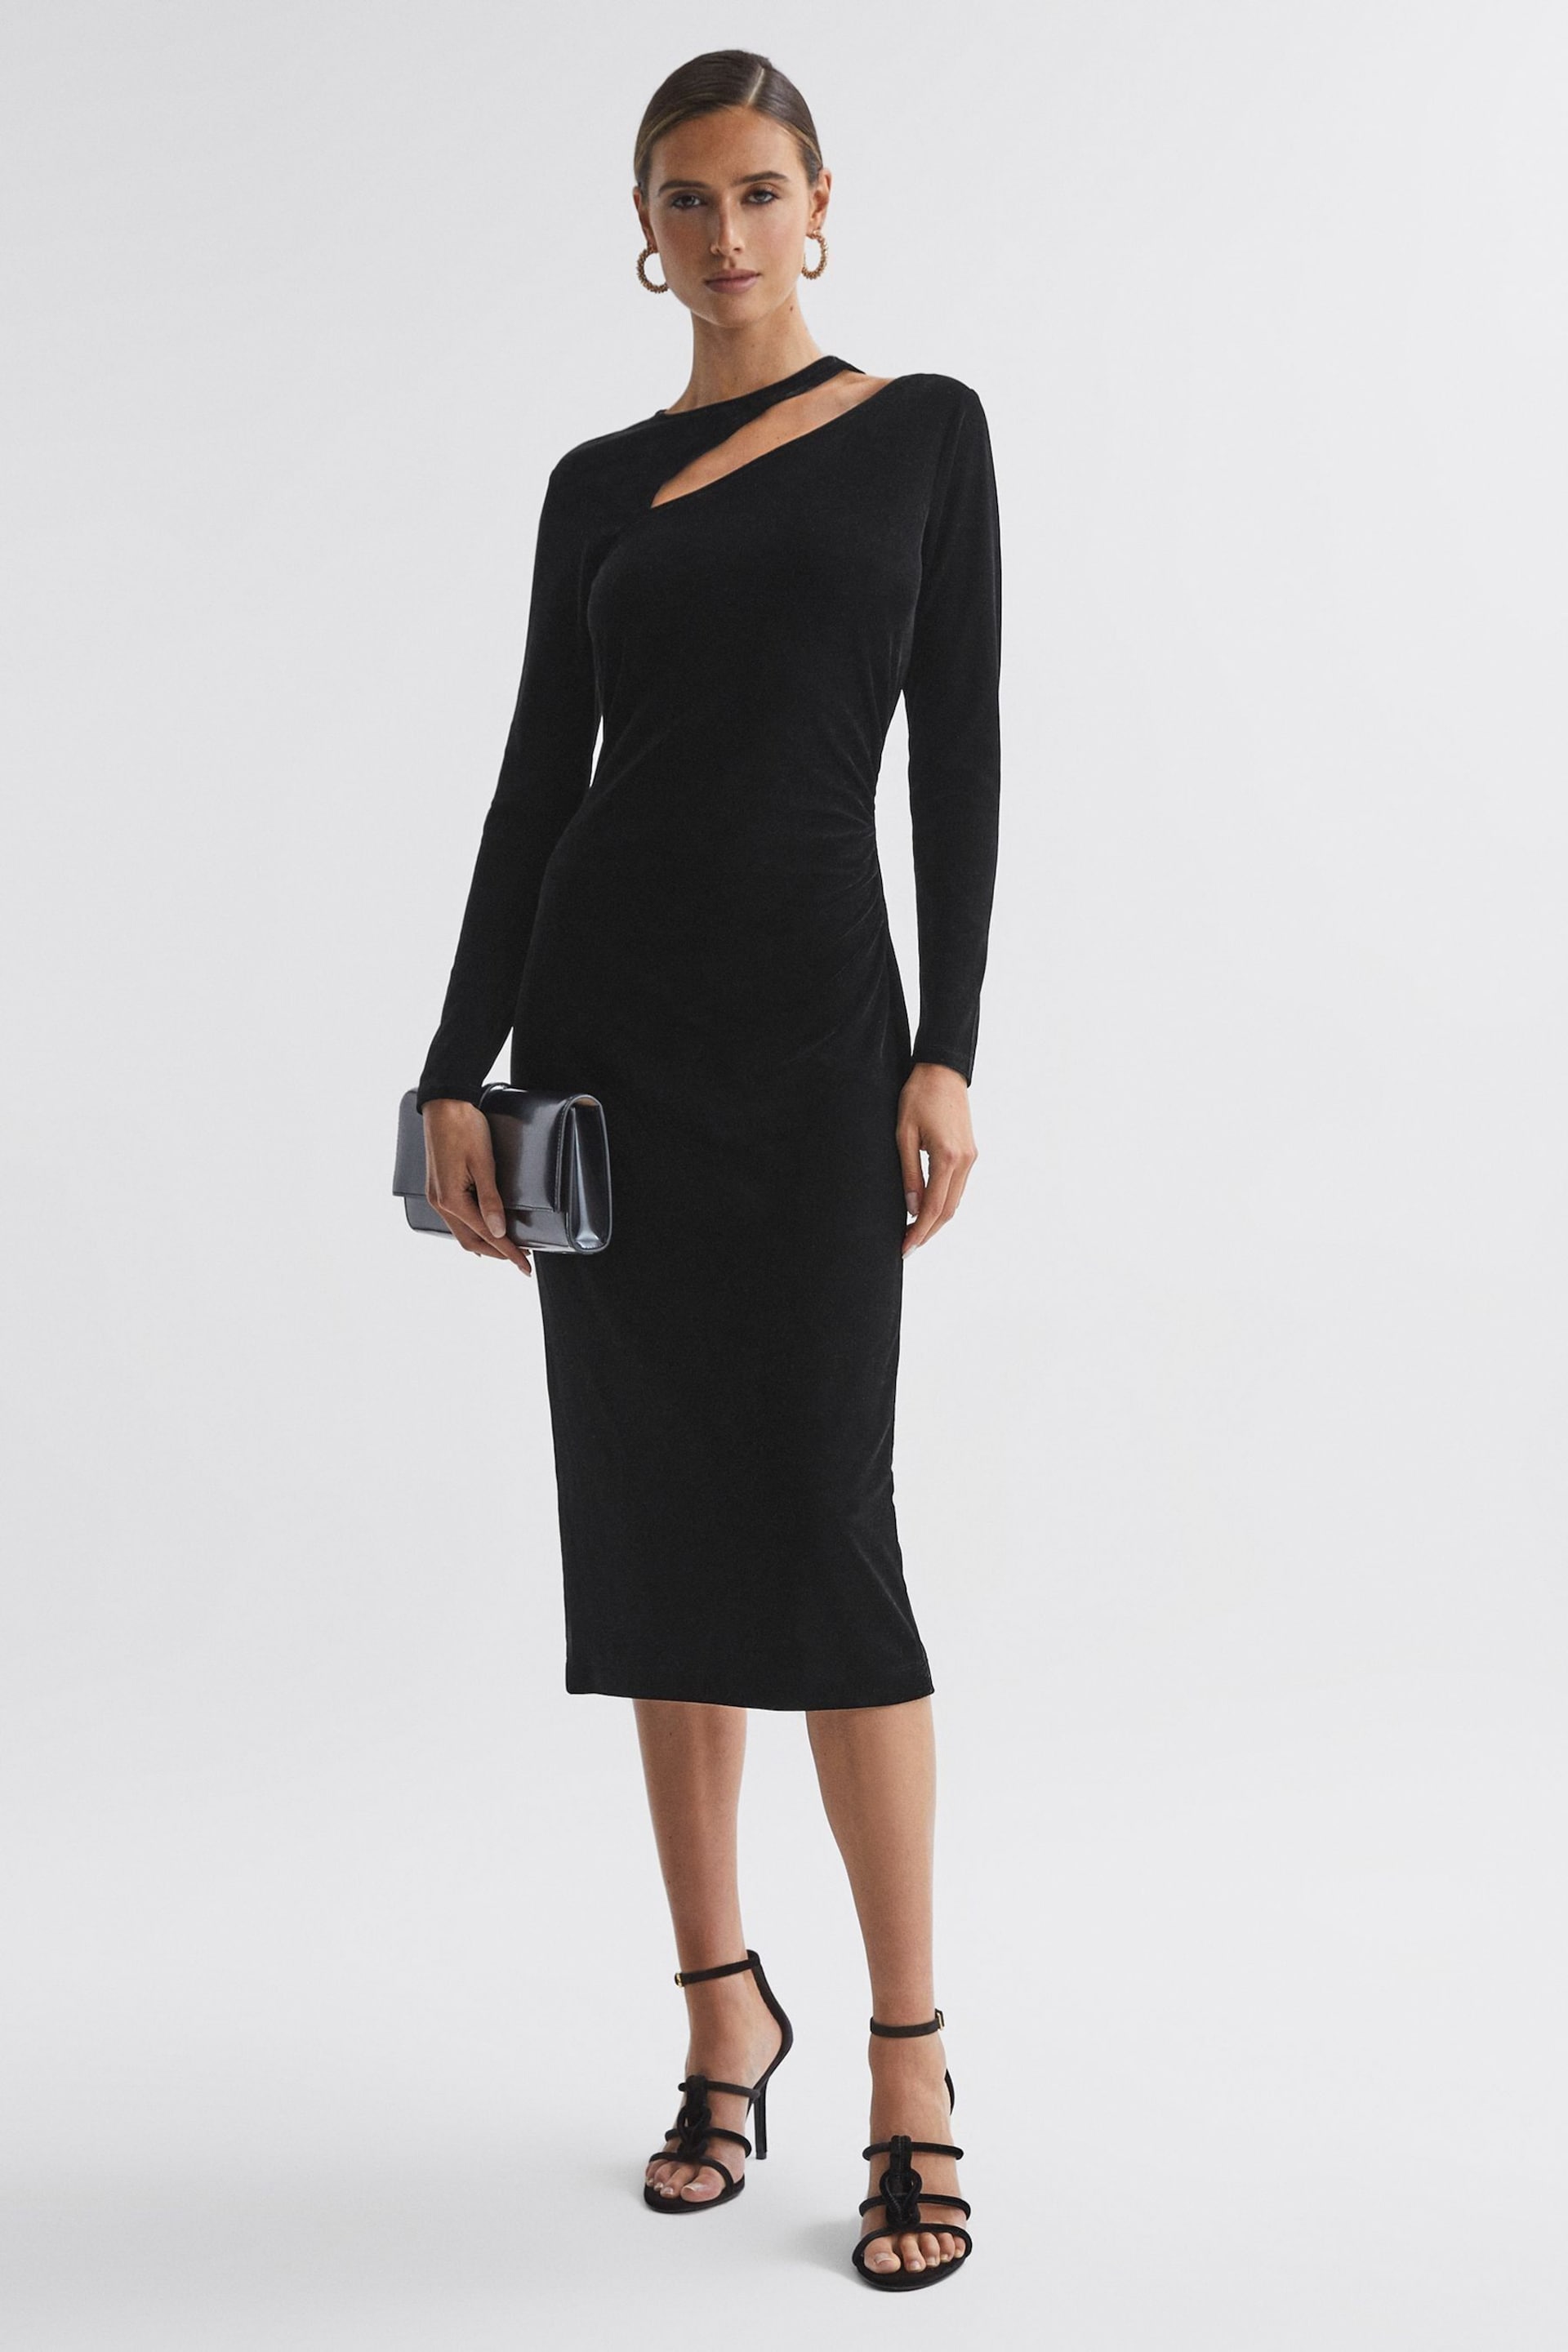 Reiss Black Macey Petite Velvet Cut-Out Midi Dress - Image 3 of 5